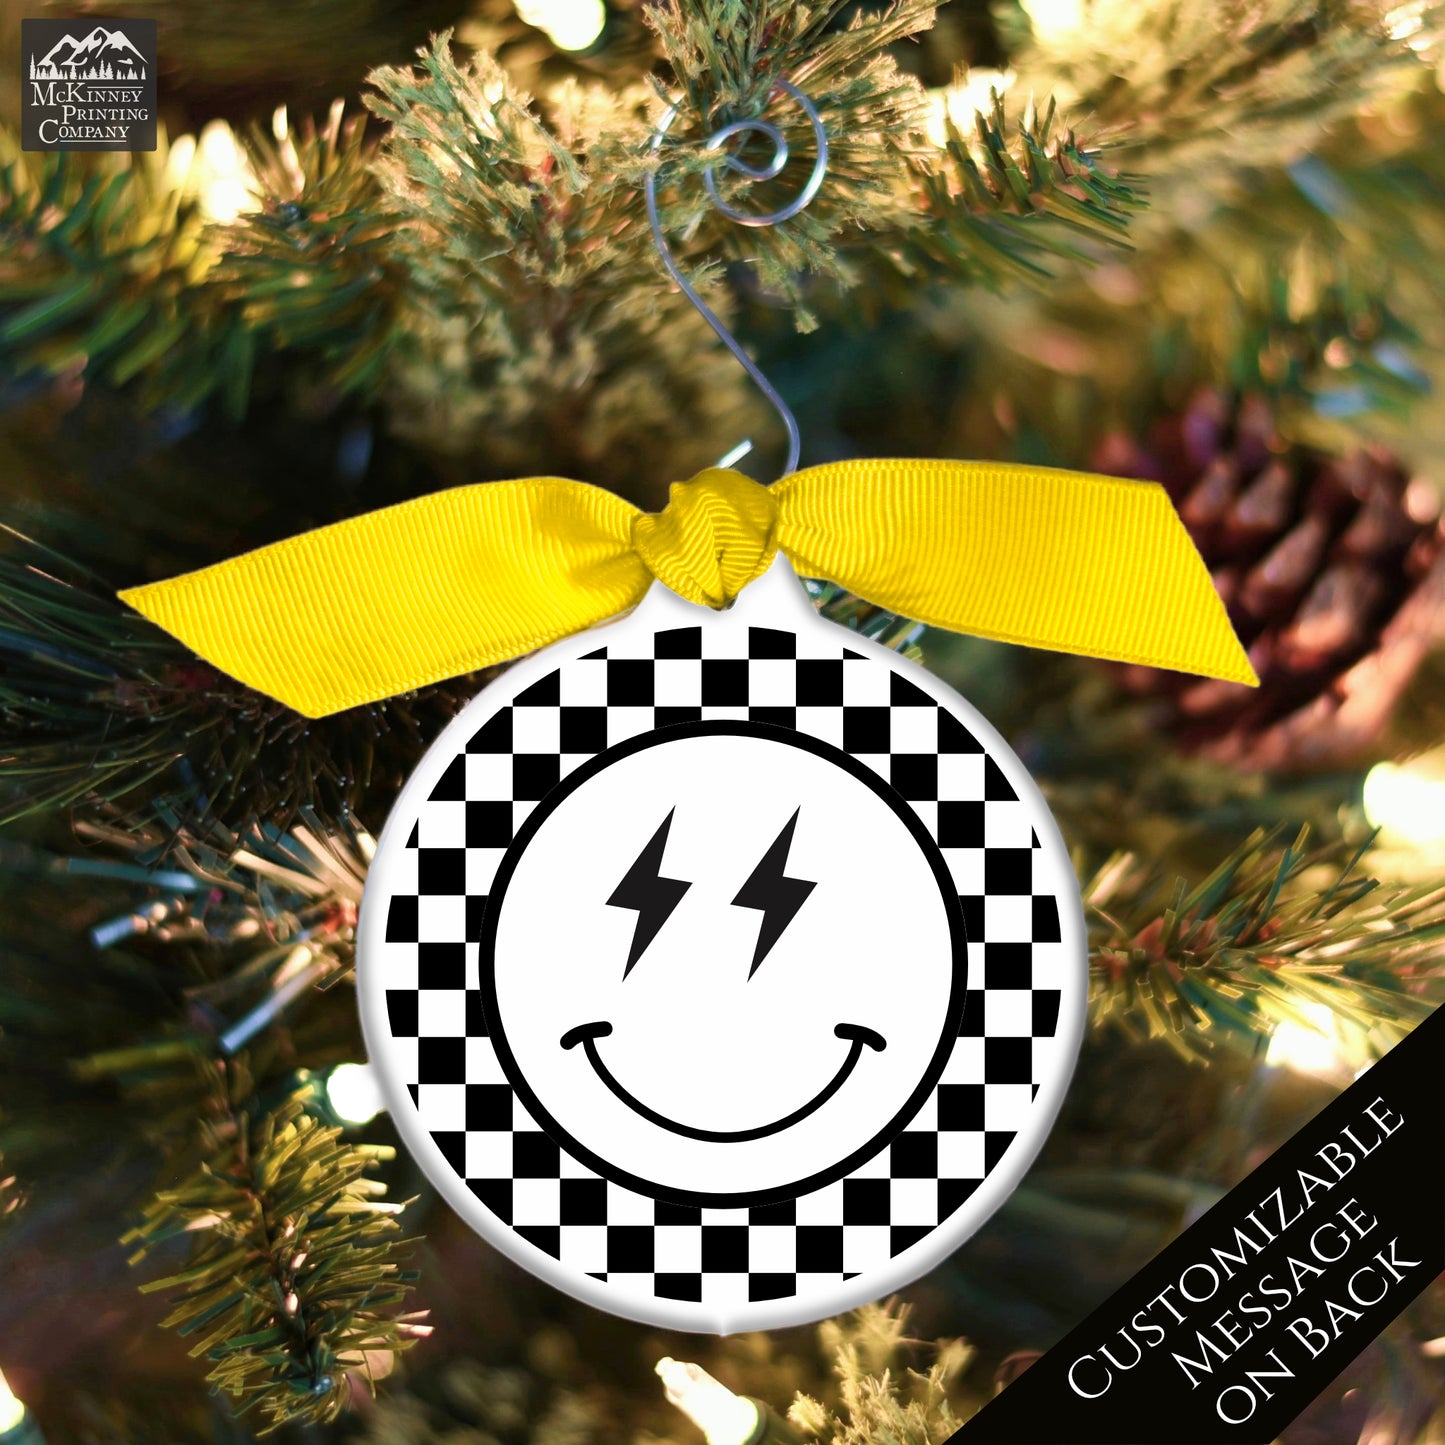 Emoji Christmas - Ornament, Smiley Face, Lightning, Black and White Check